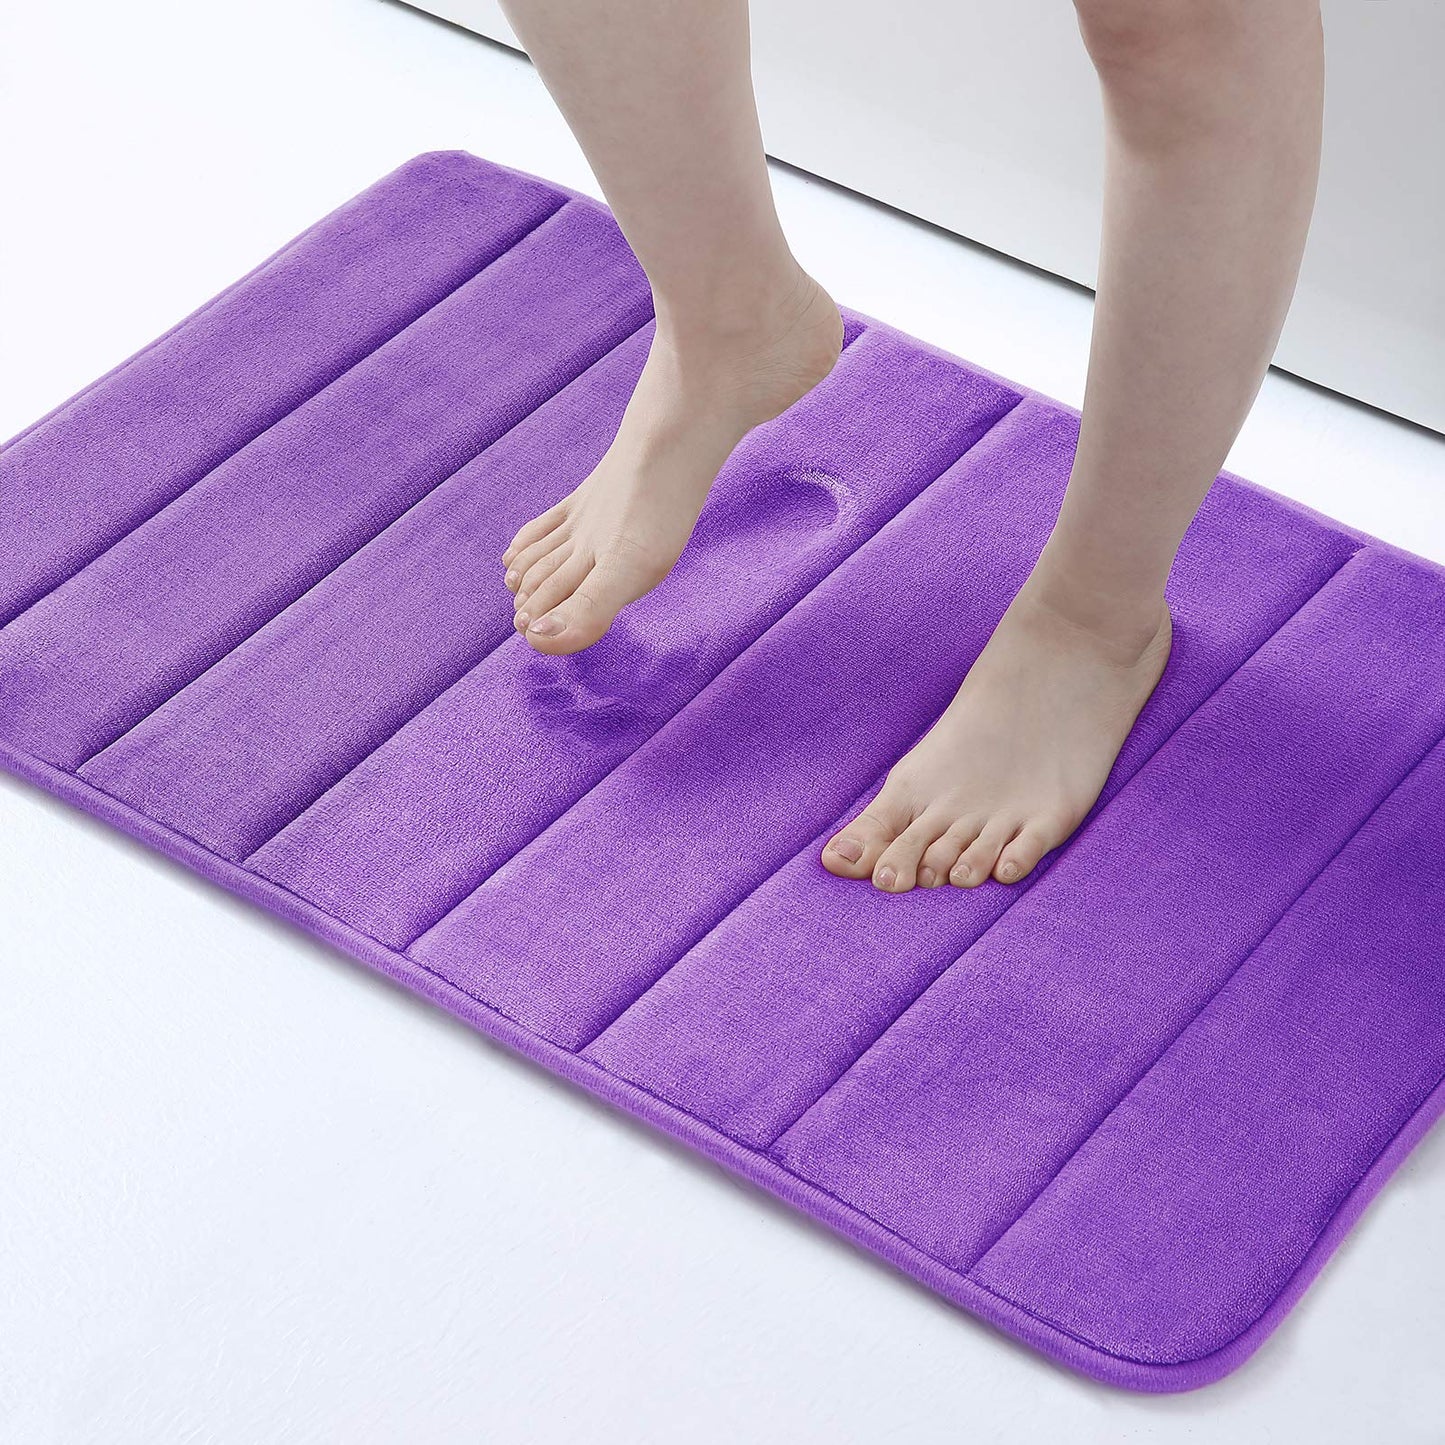 Memory Foam Bath Mat Anti-Slip Shower Carpet Soft Foot Pad Decoration Floor Protector Absorbent Quick Dry Bathroom Rug Mats & Rugs DailyAlertDeals 43x61cm(17x24inch) China purple